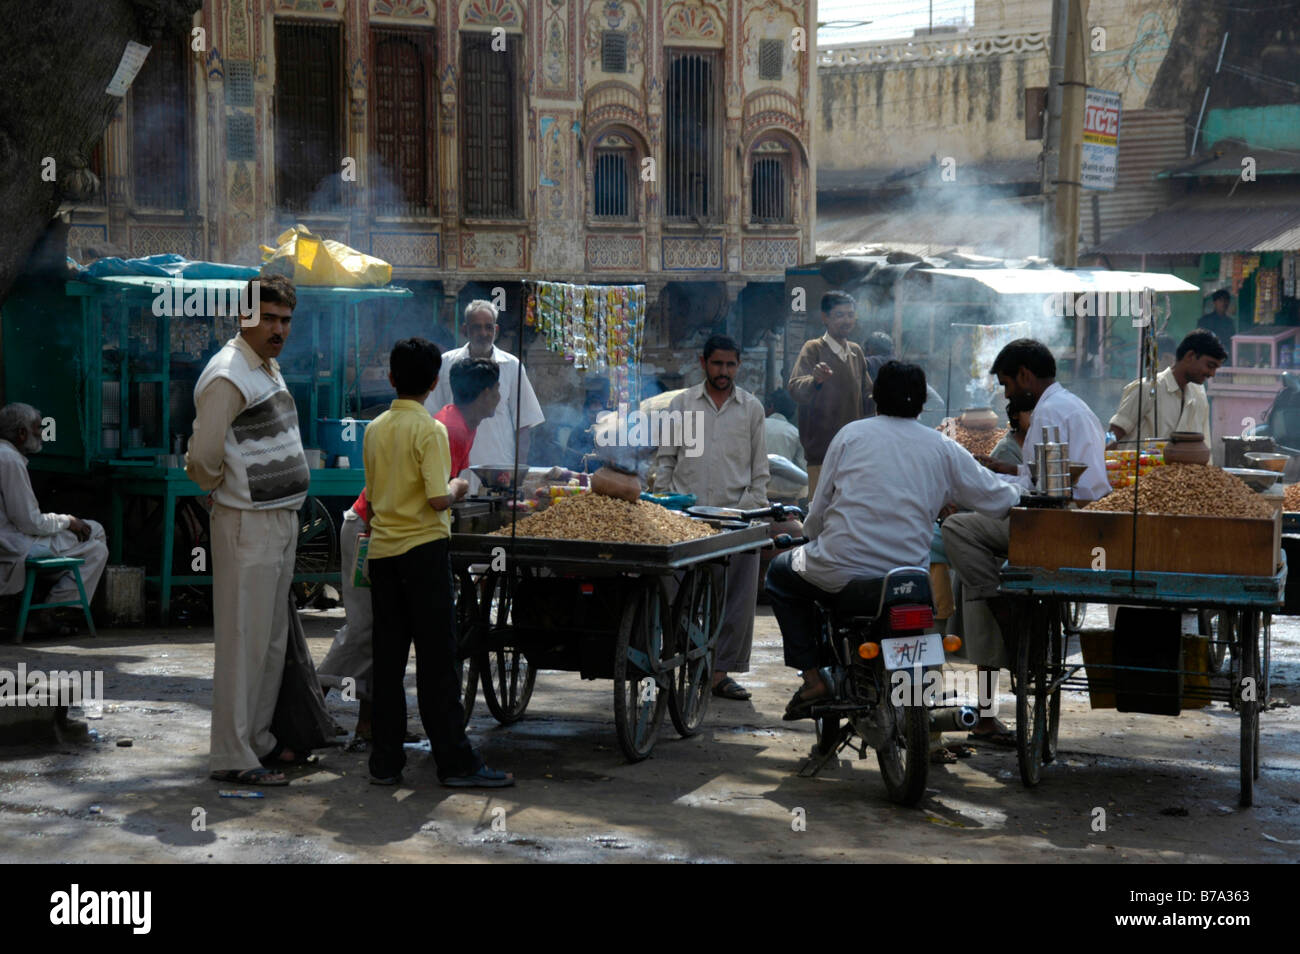 Street scene, men standing around smokey food stands, Lachmangarh, Rajasthan, India, Asia Stock Photo